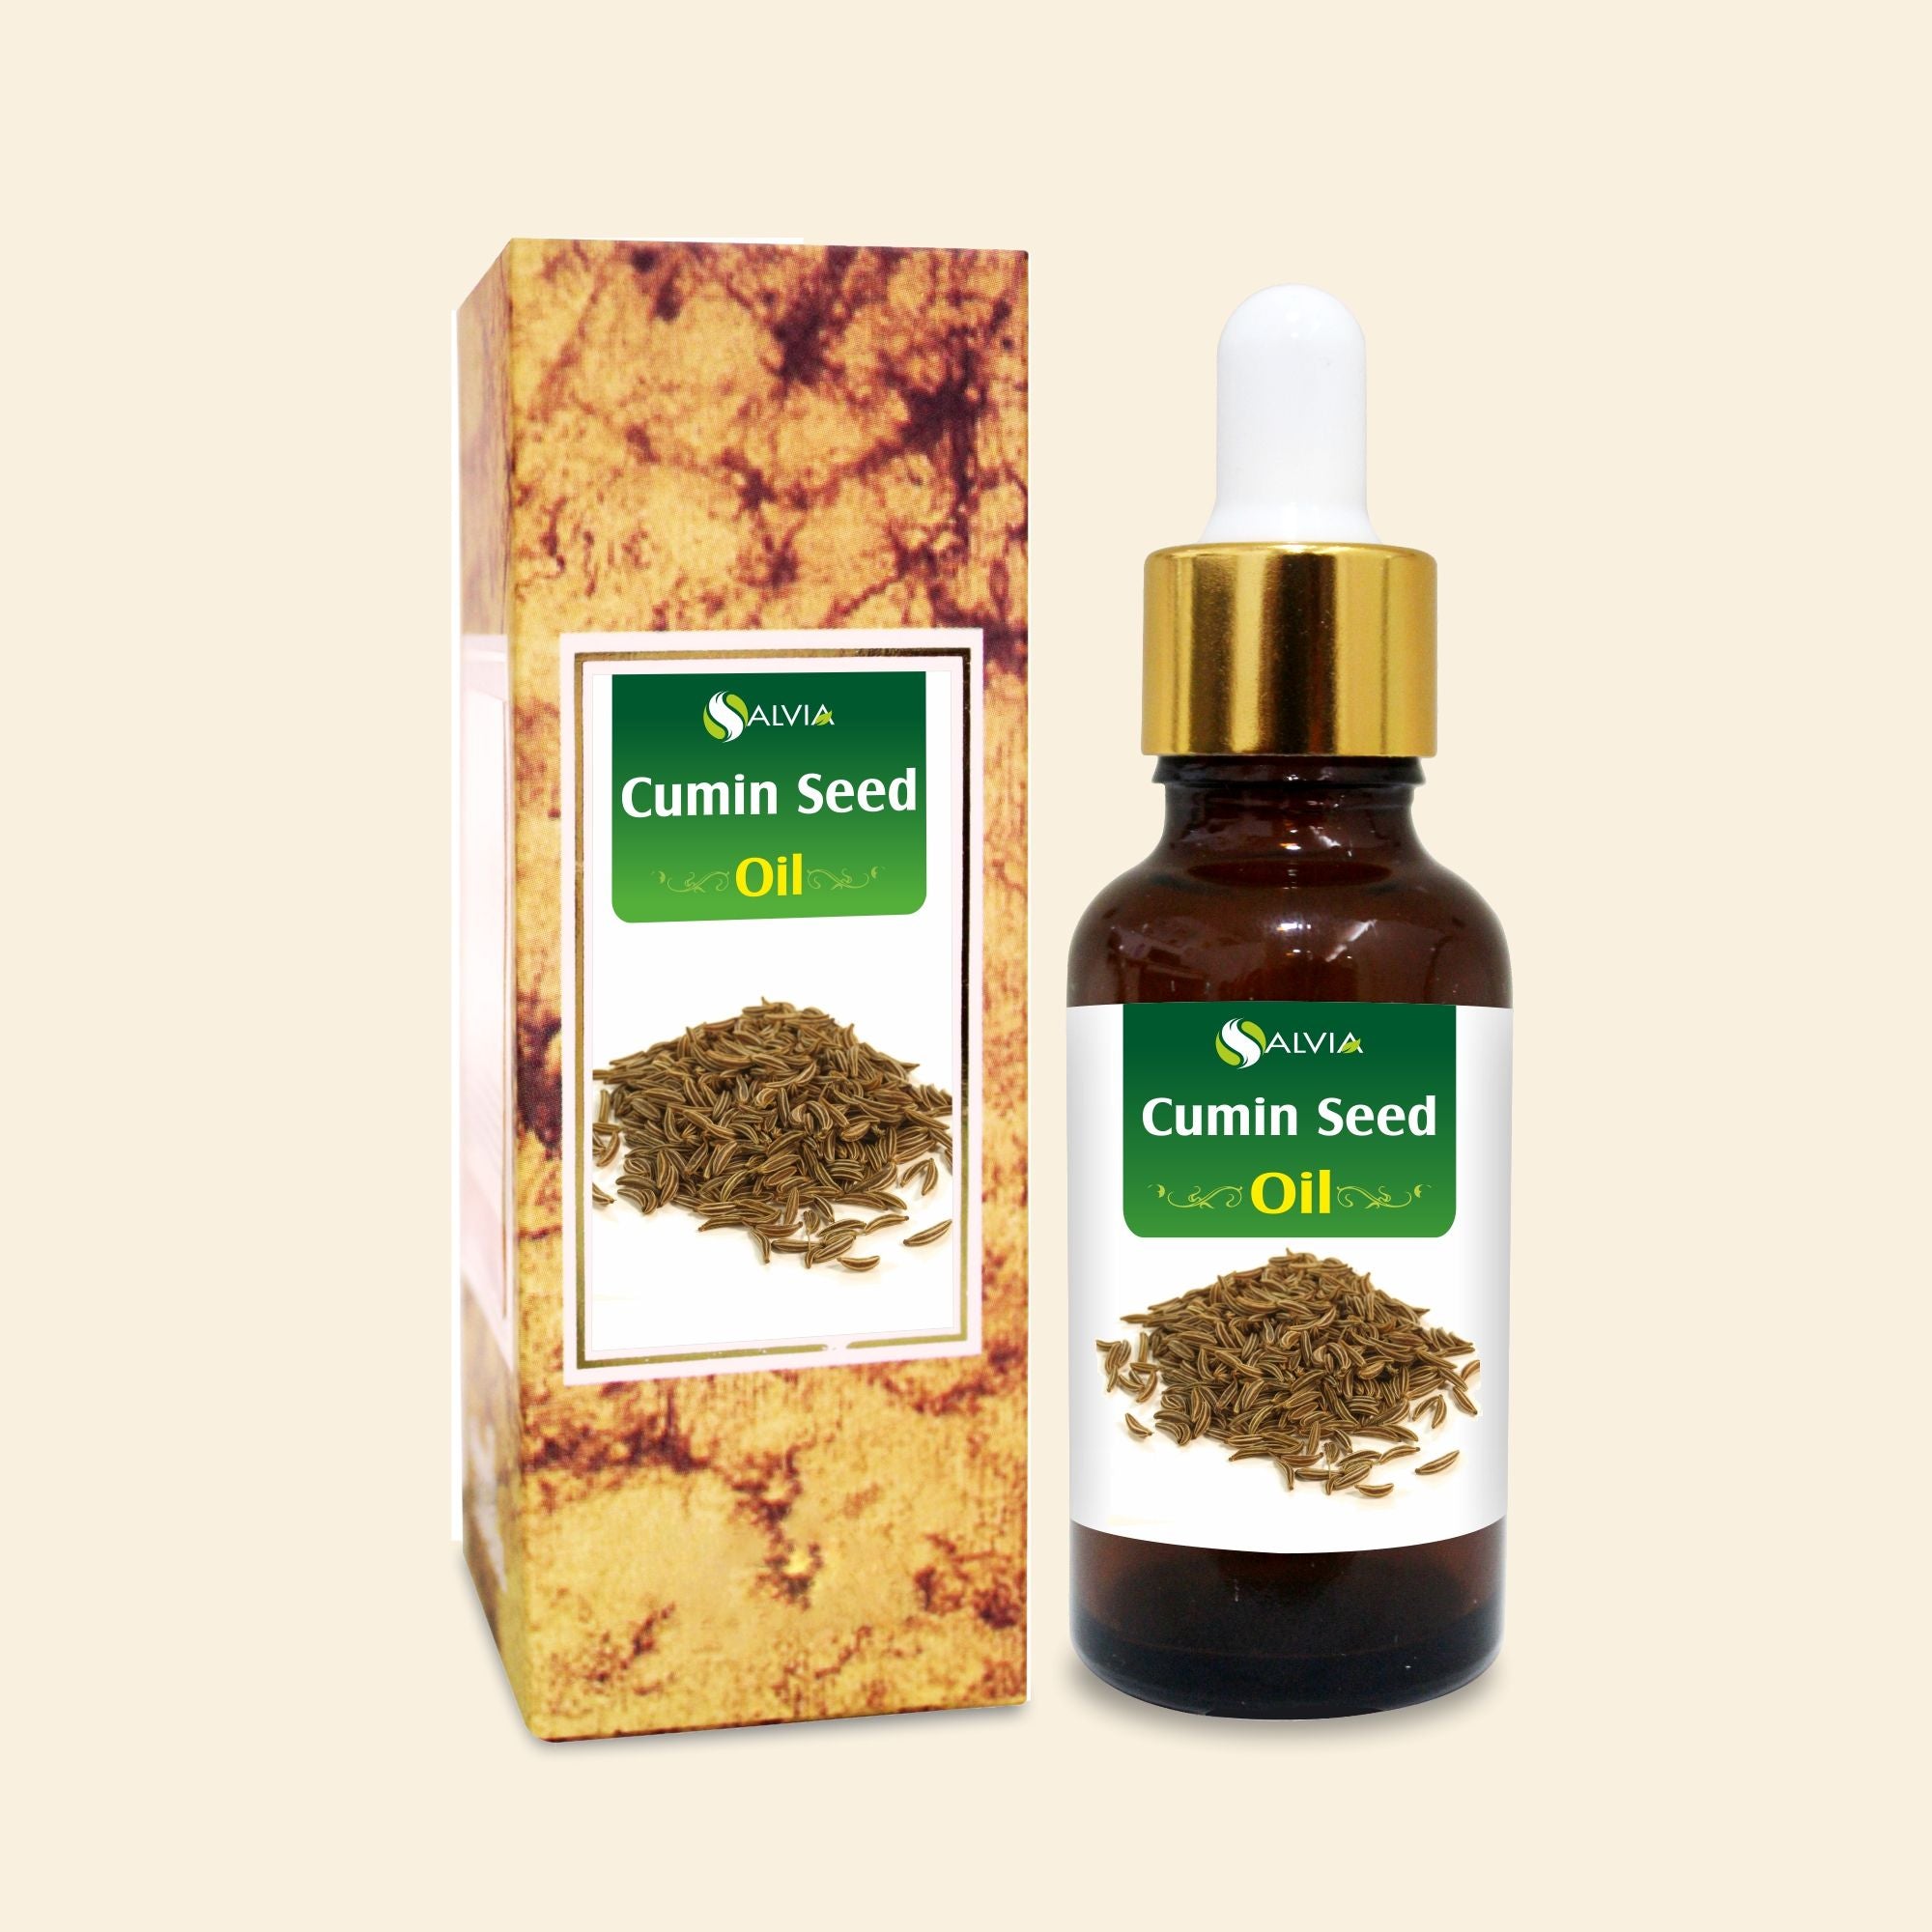 Salvia Natural Essential Oils Cumin Seed Oil (Cuminum Cyminum) 100% Natural Pure Essential Oil